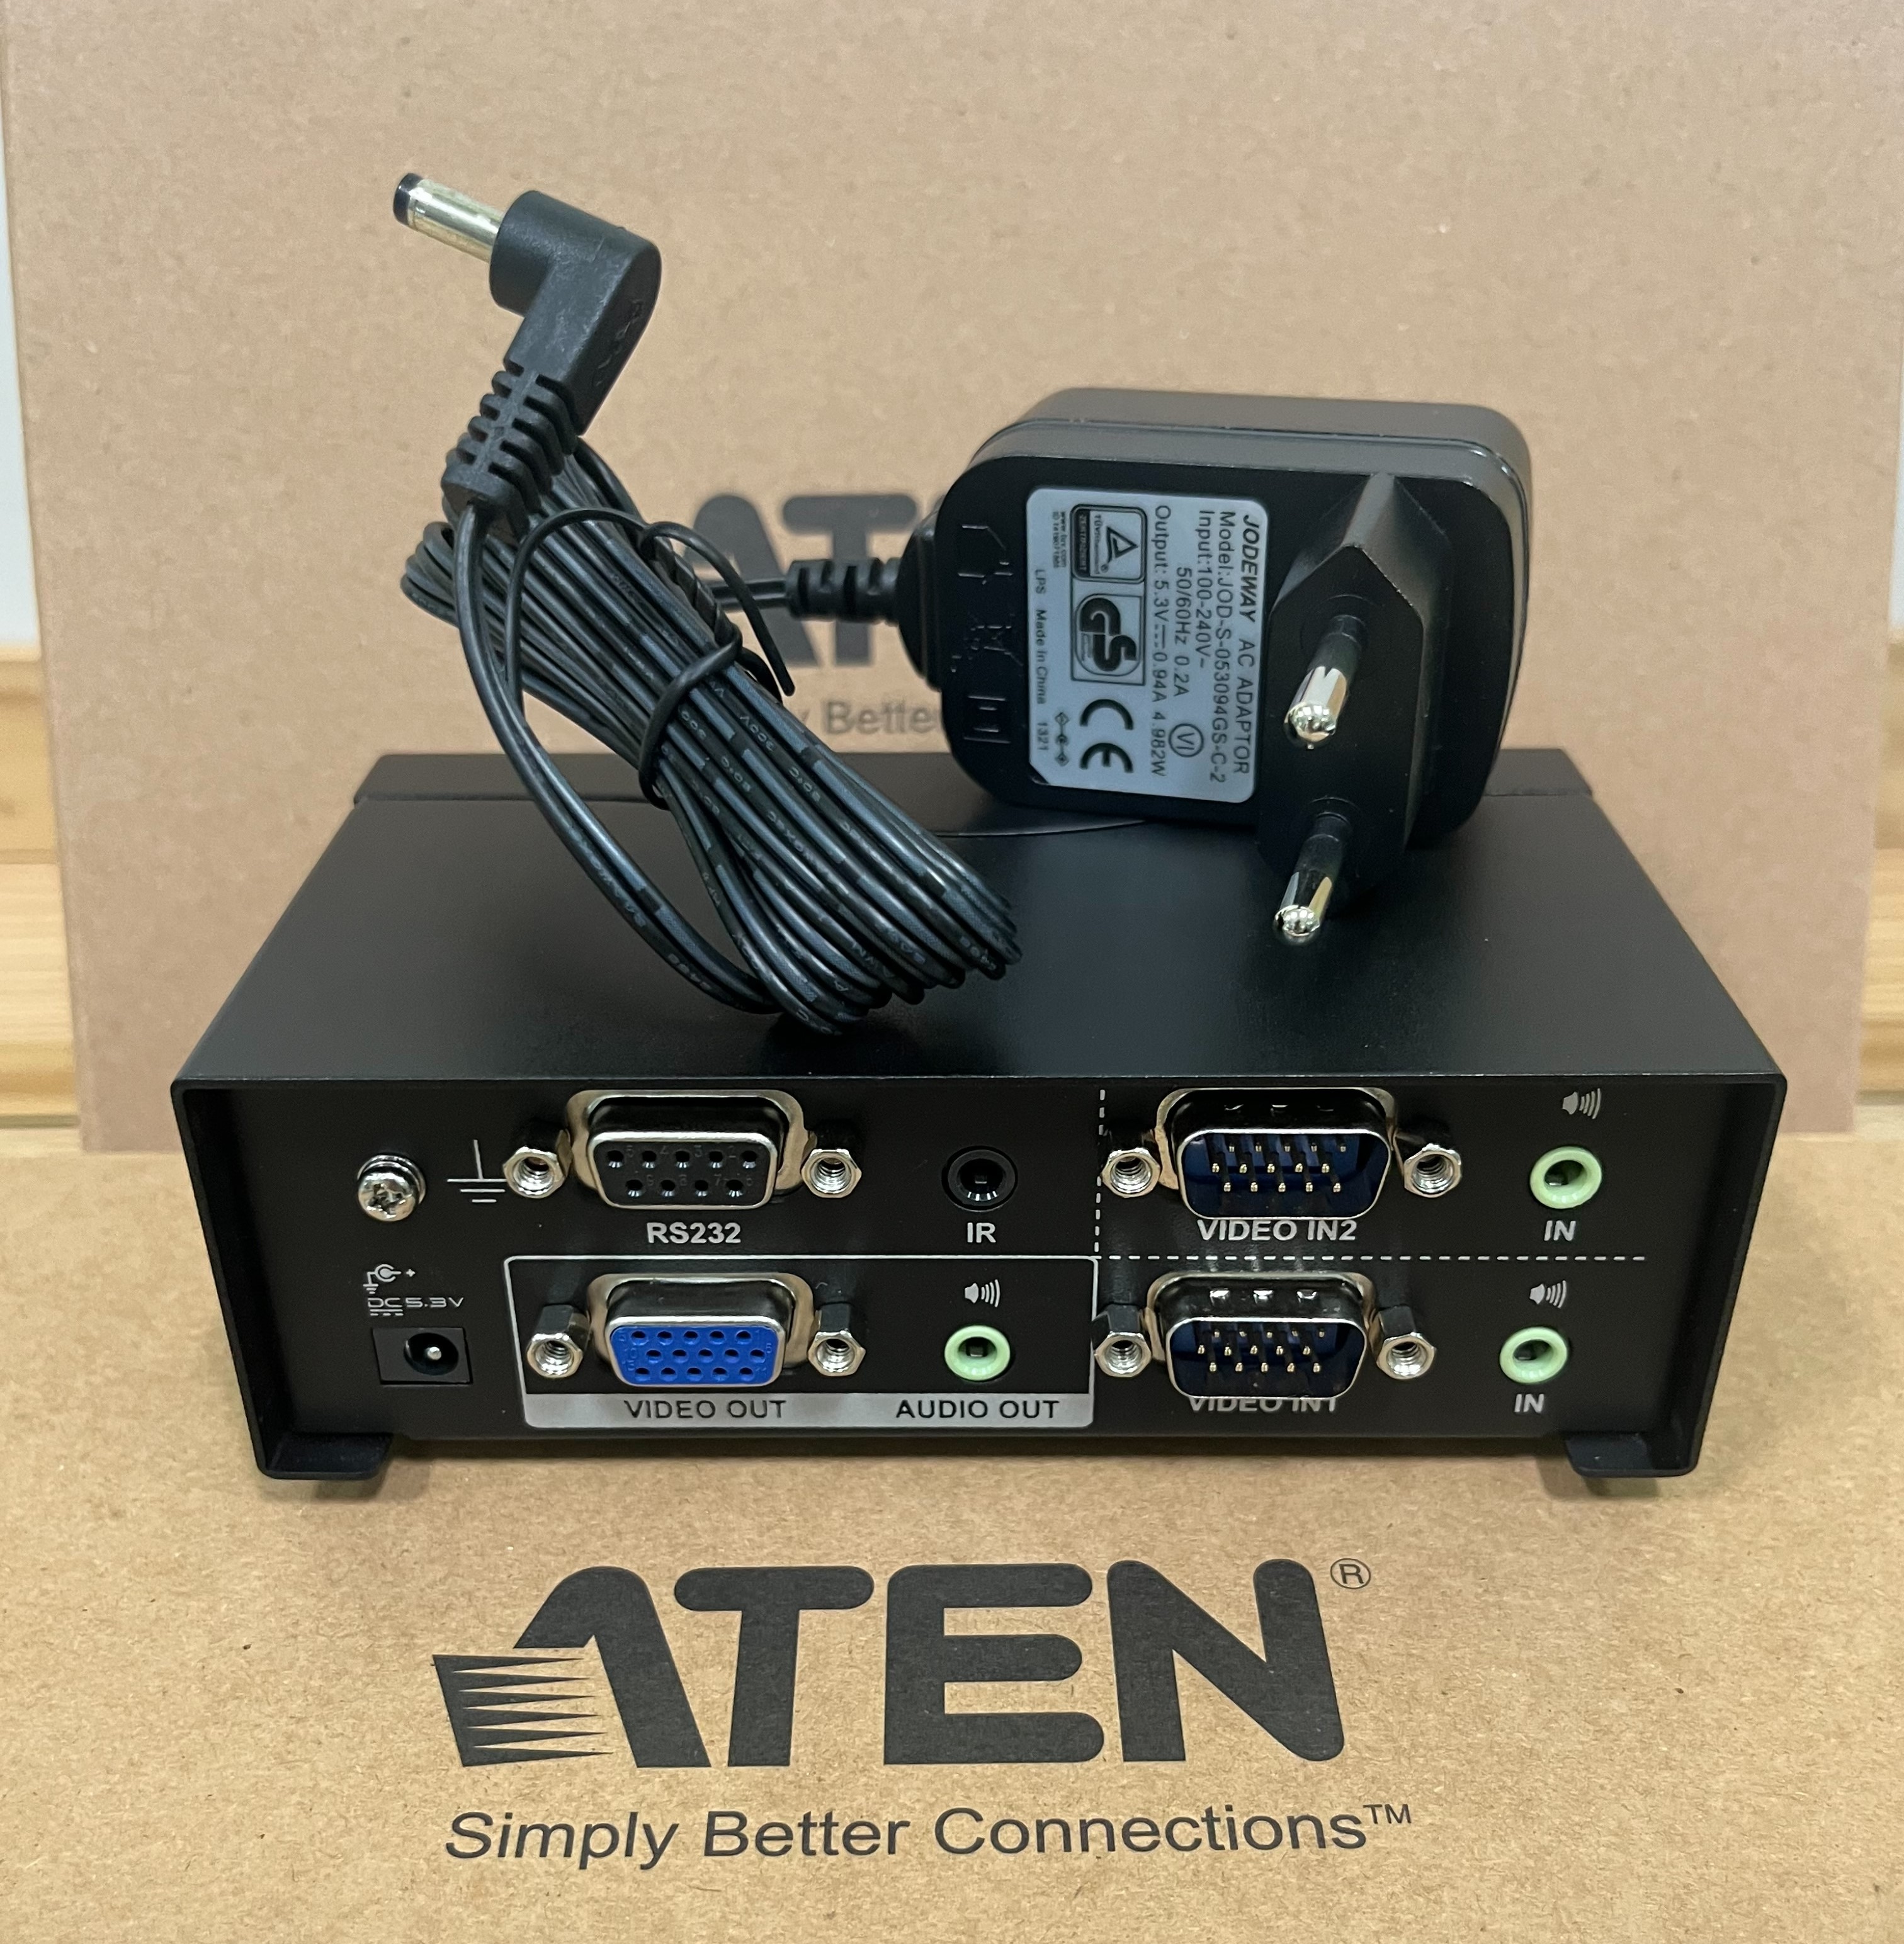 VGA Switch 2-Port-Aten